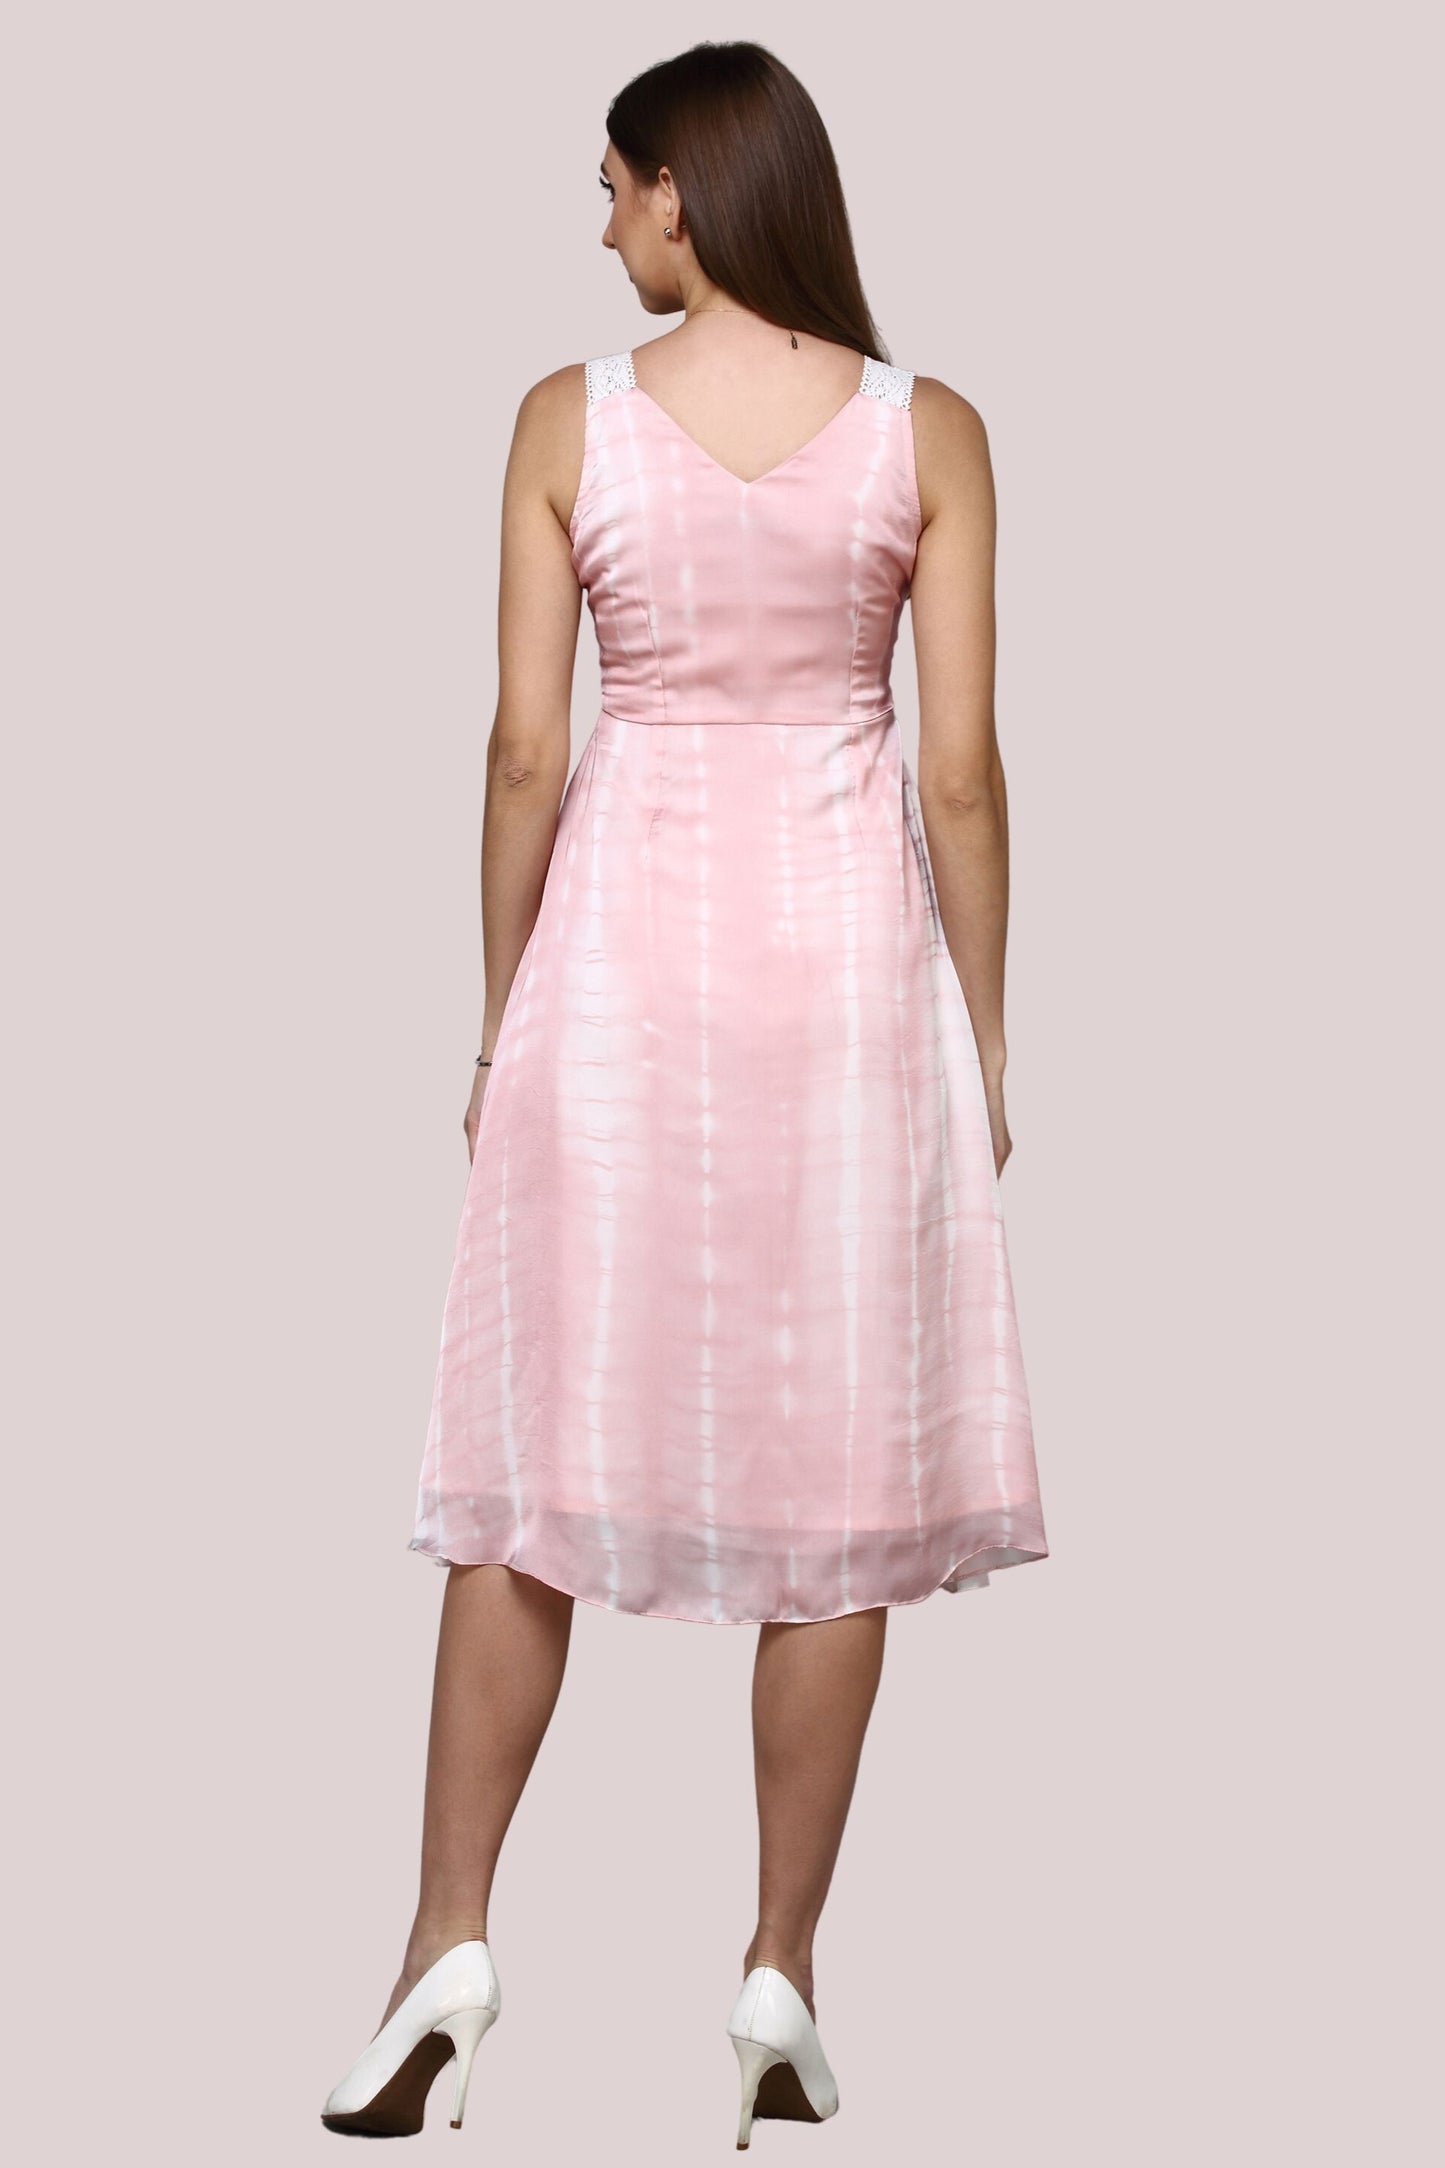 Pink Tie-die Dress With Lace Shoulder Straps